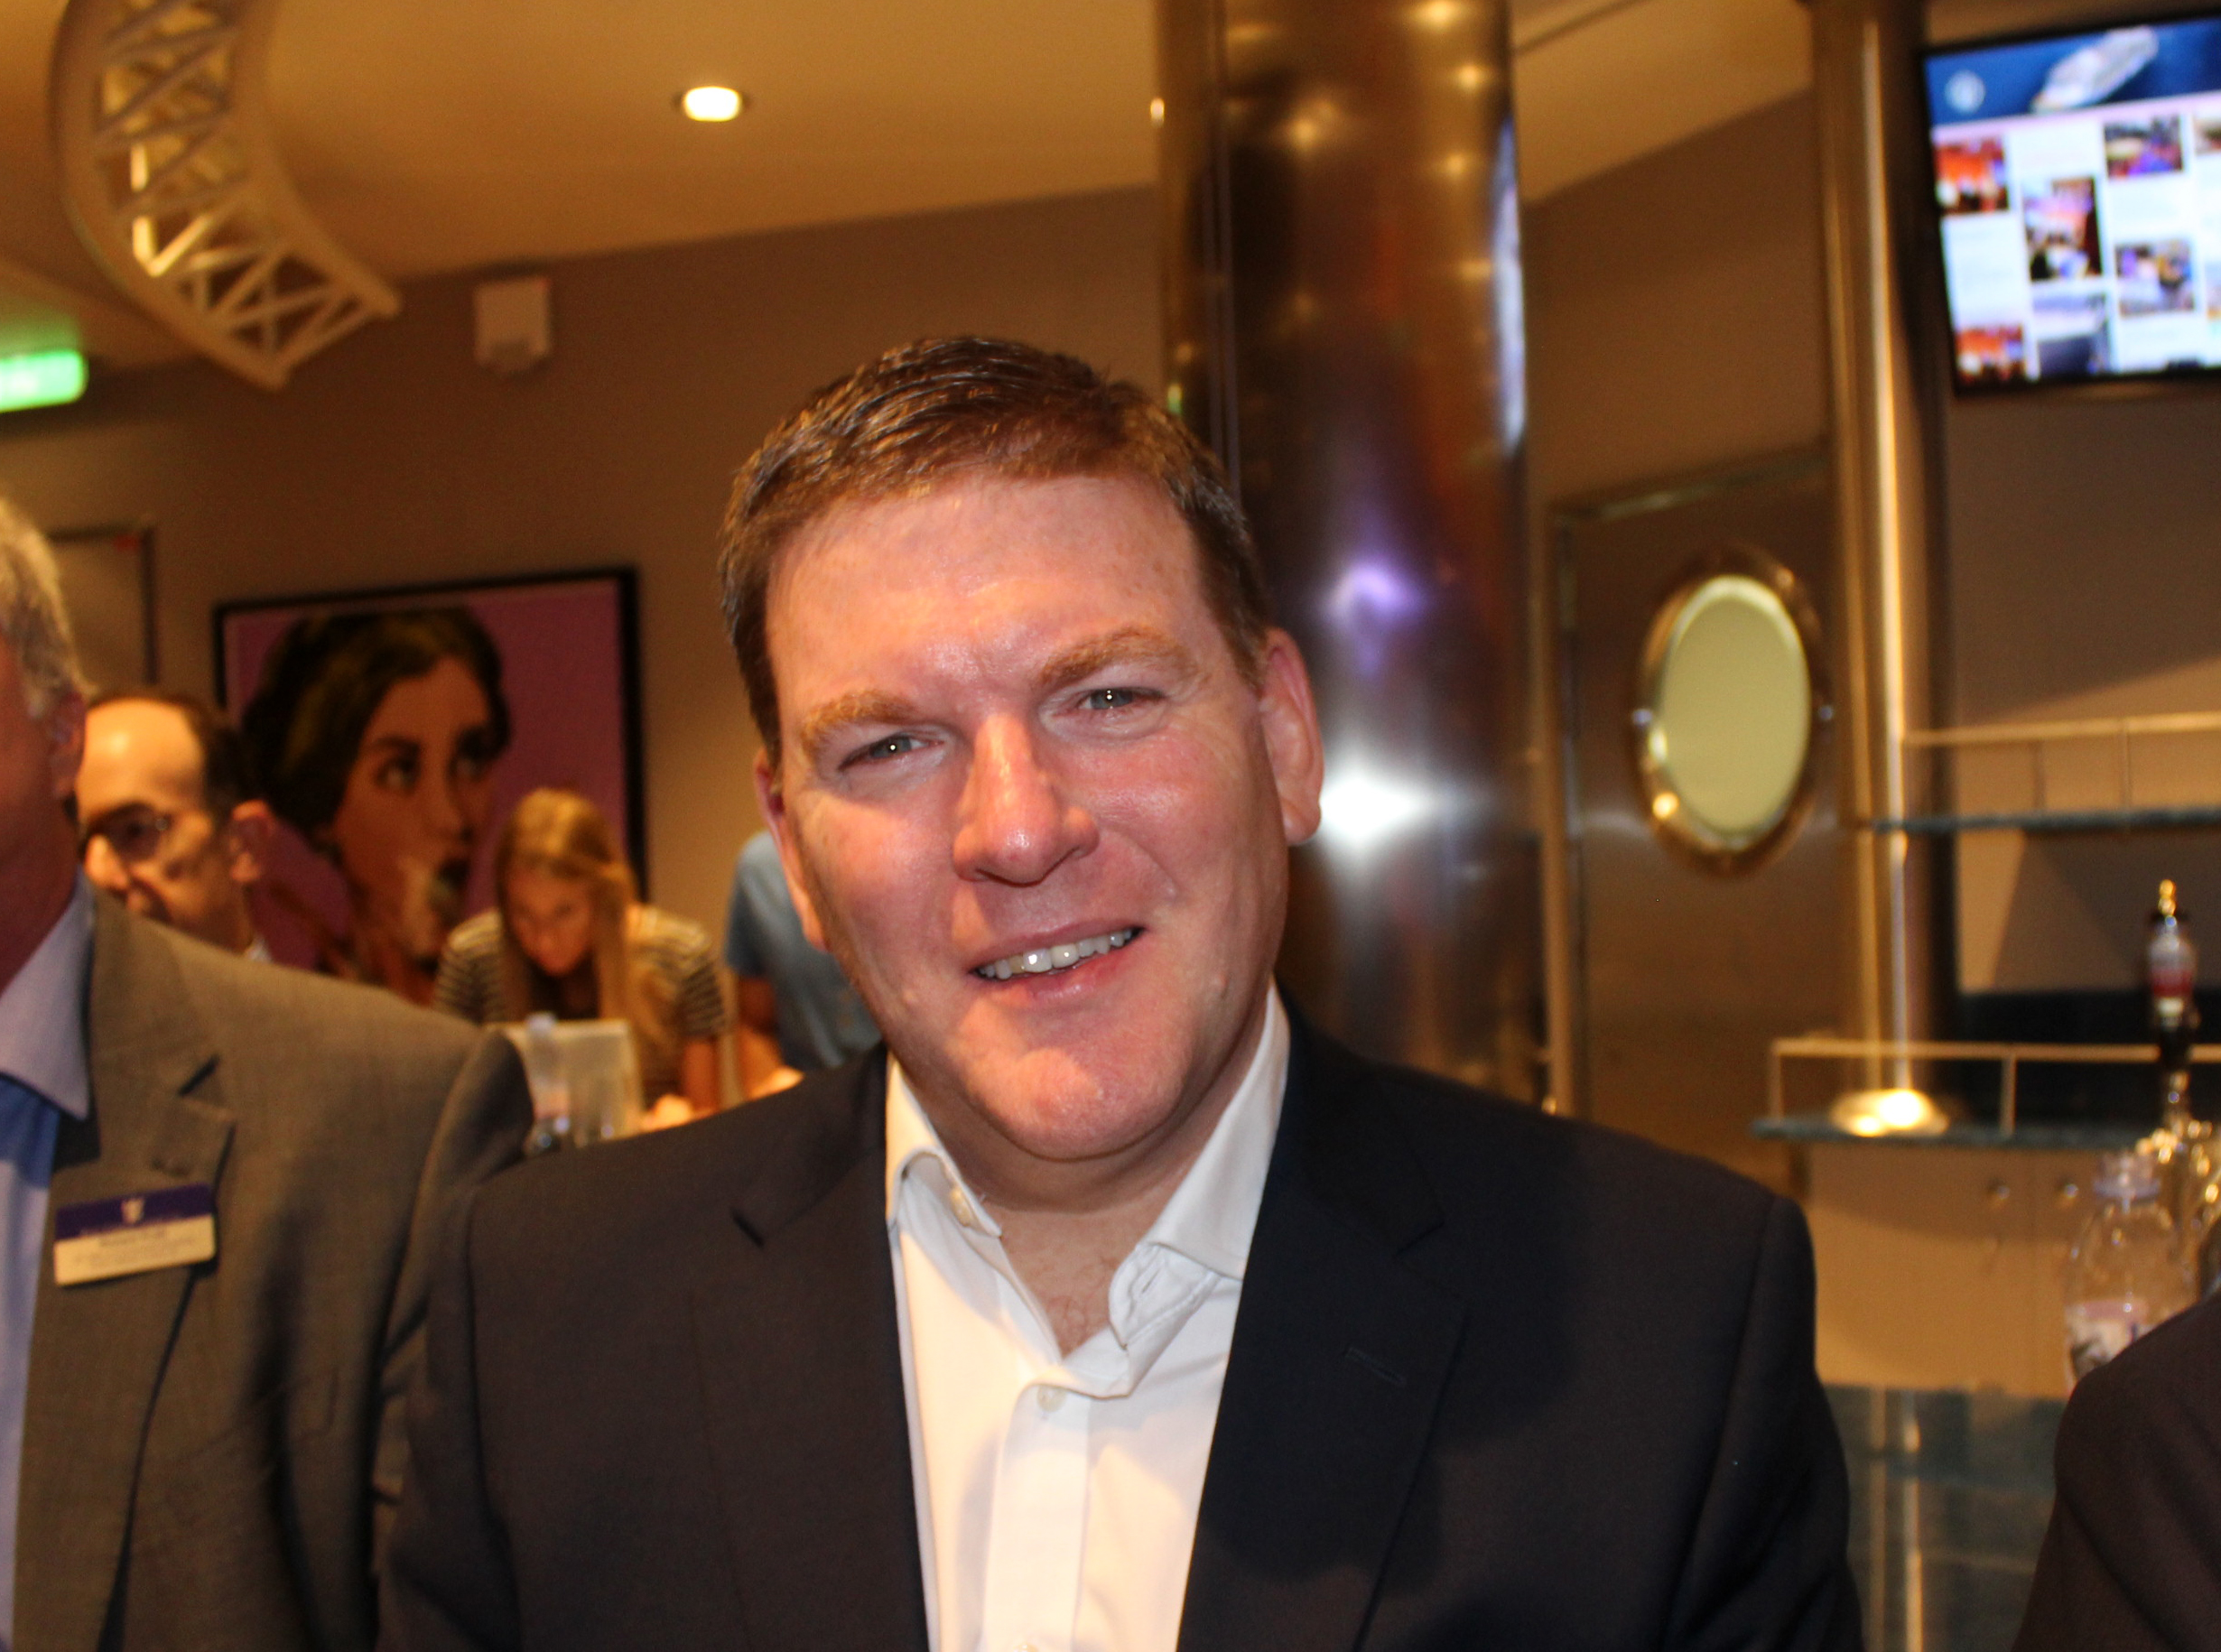 Gavin Smith, vifce presidente Senior Internacional e diretor da RCL Cruises